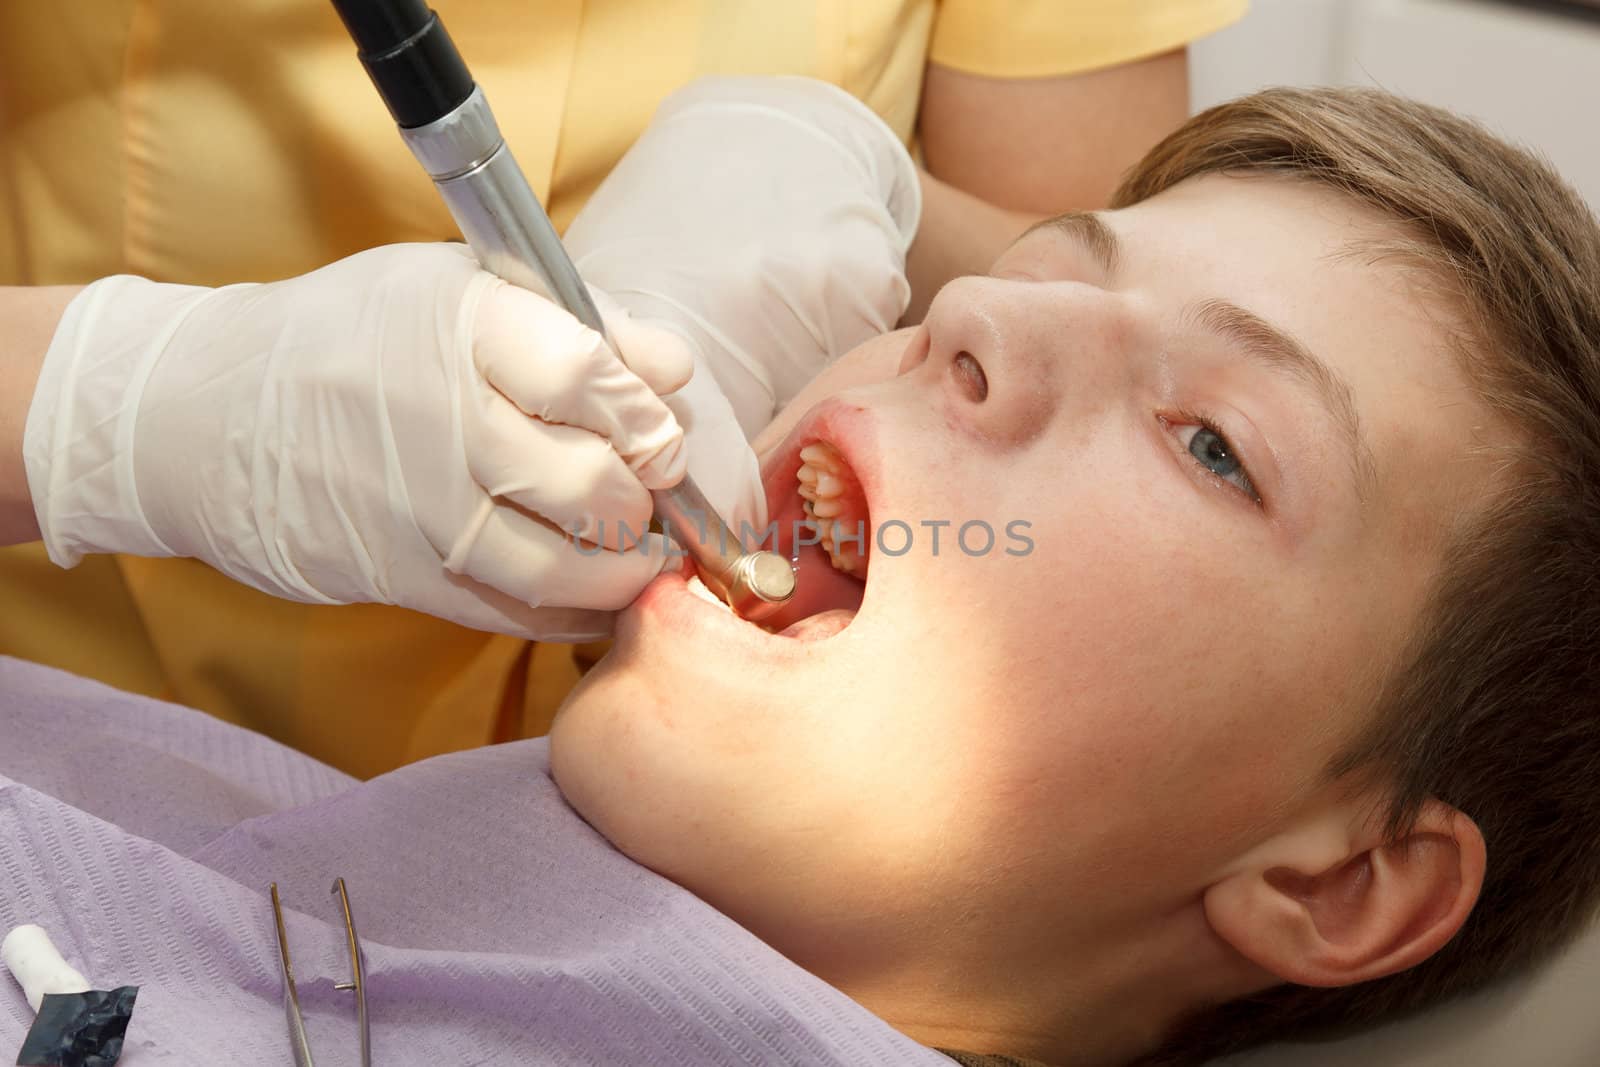 dentist treats the boy's teeth with a drill